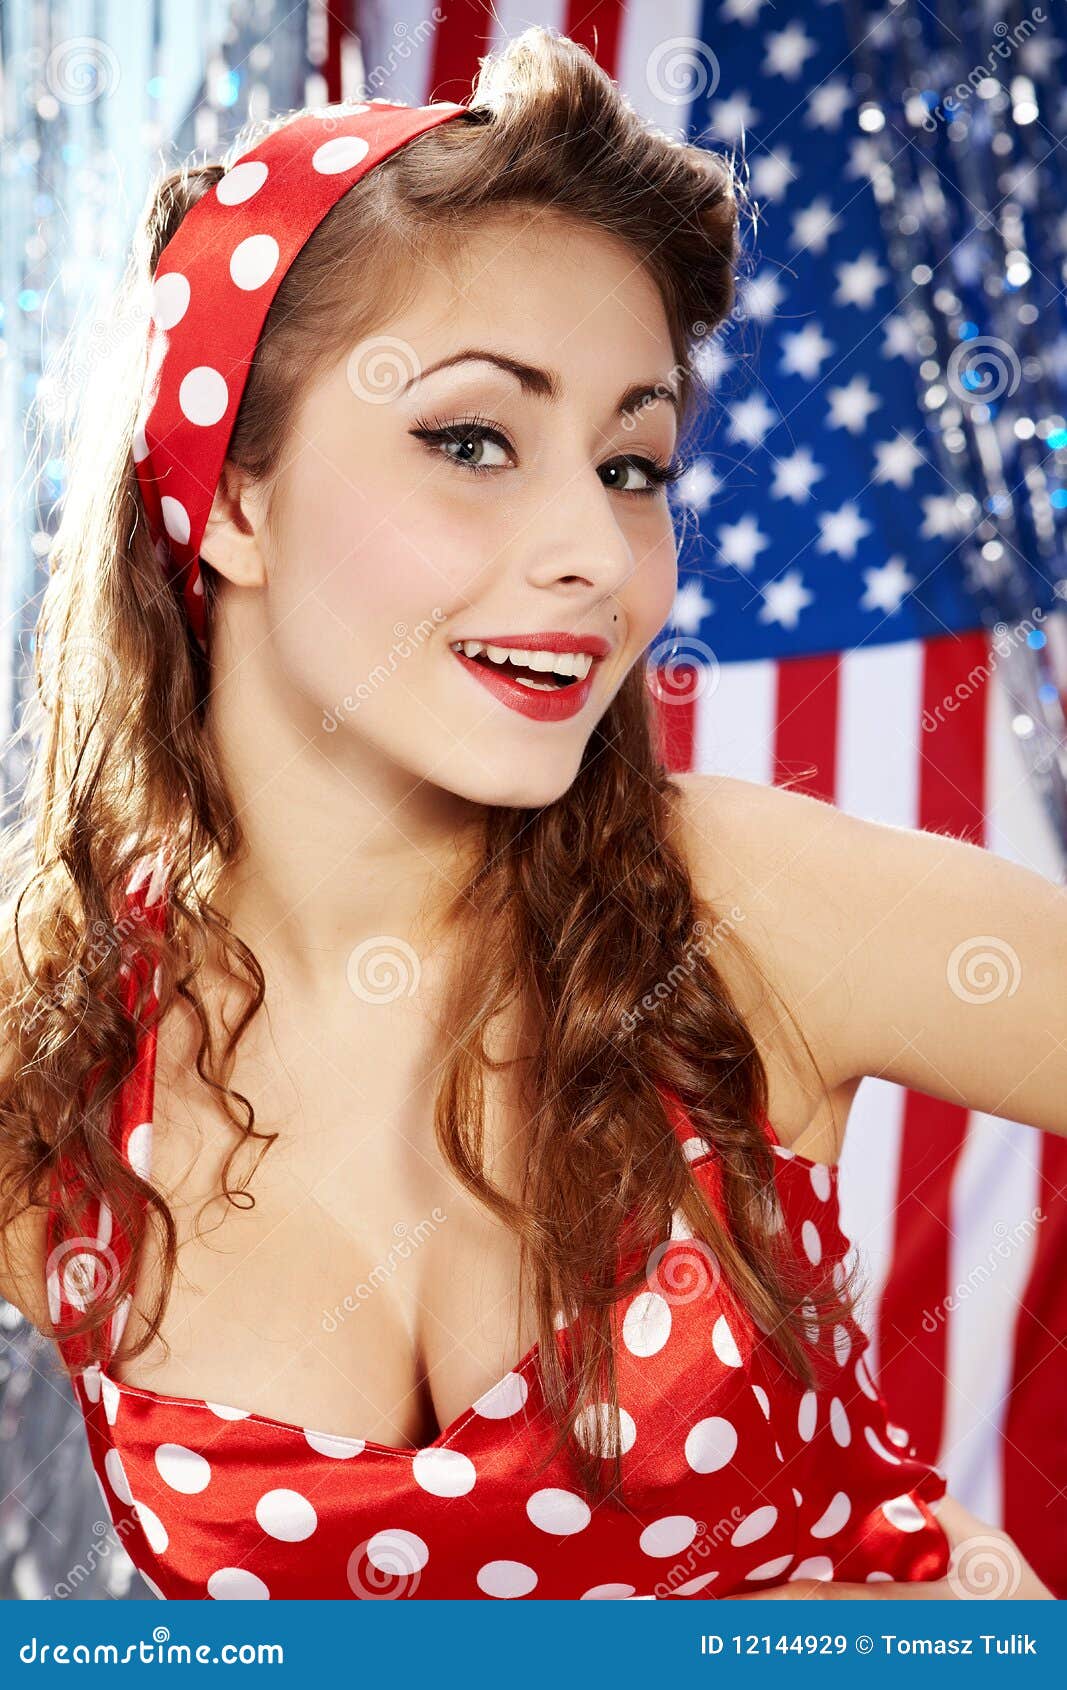 chelsea faulkner recommends hot patriotic girls pic